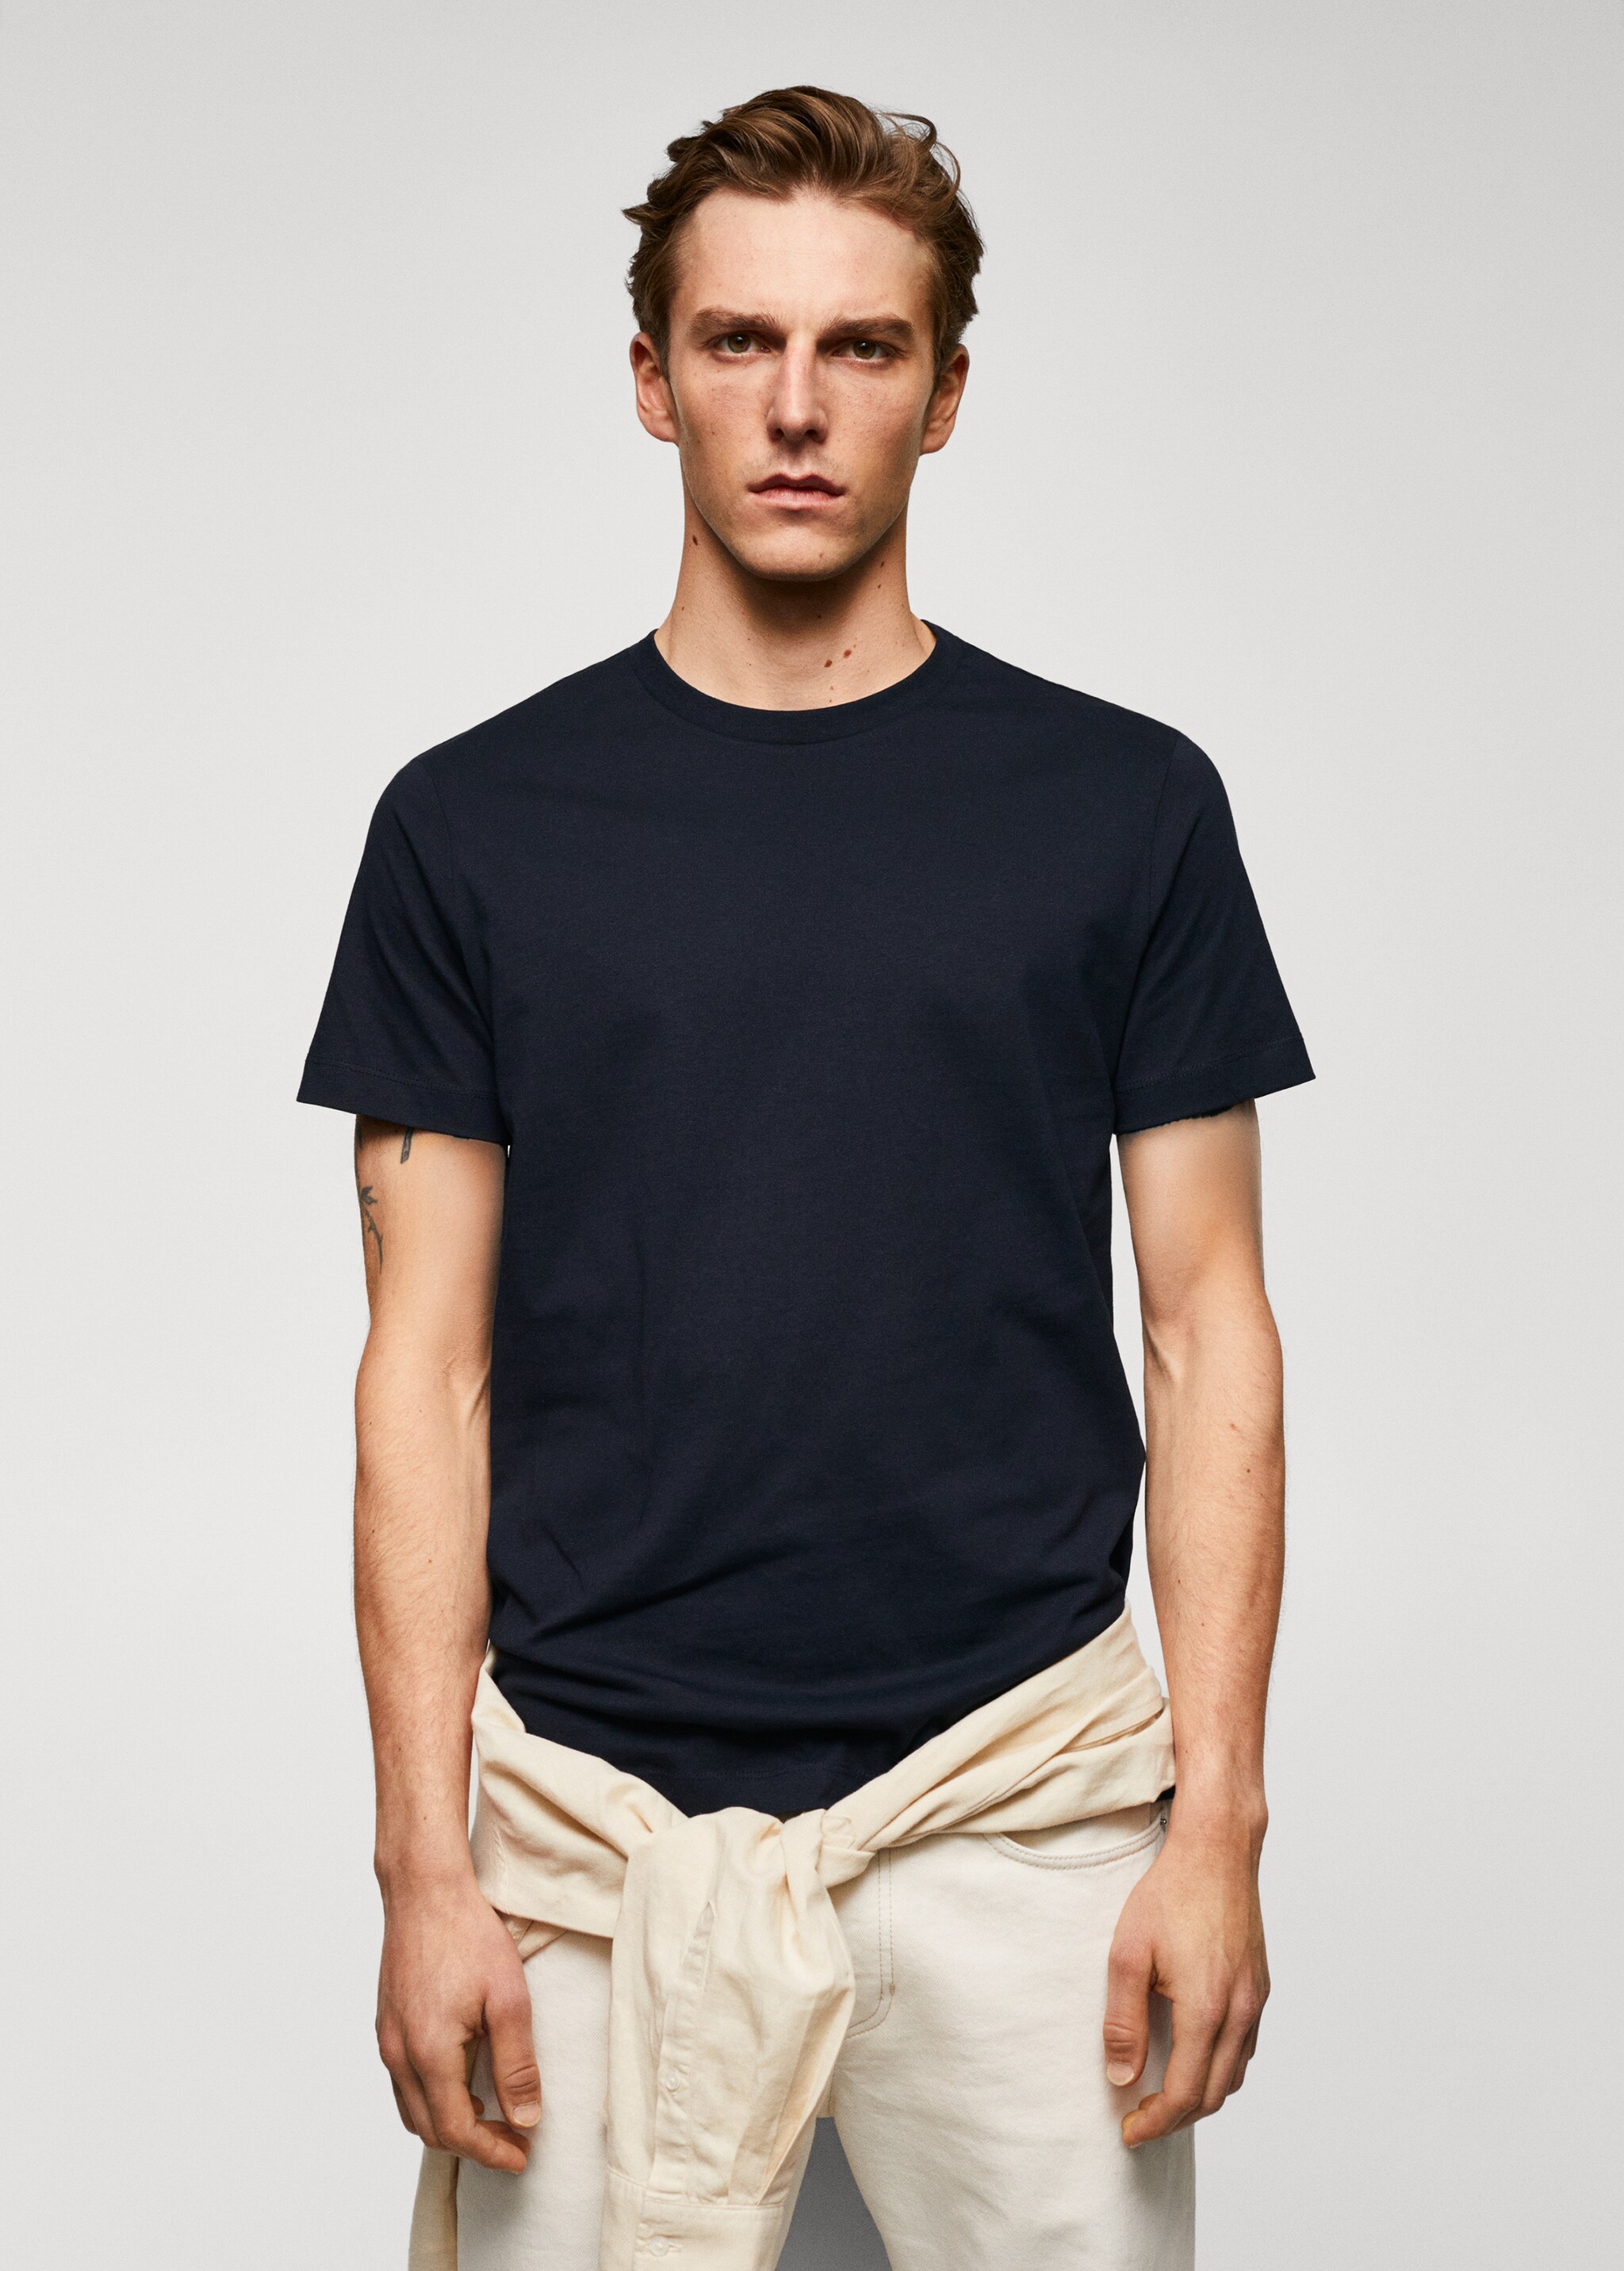 Basic cotton stretch T-shirt - Medium plane